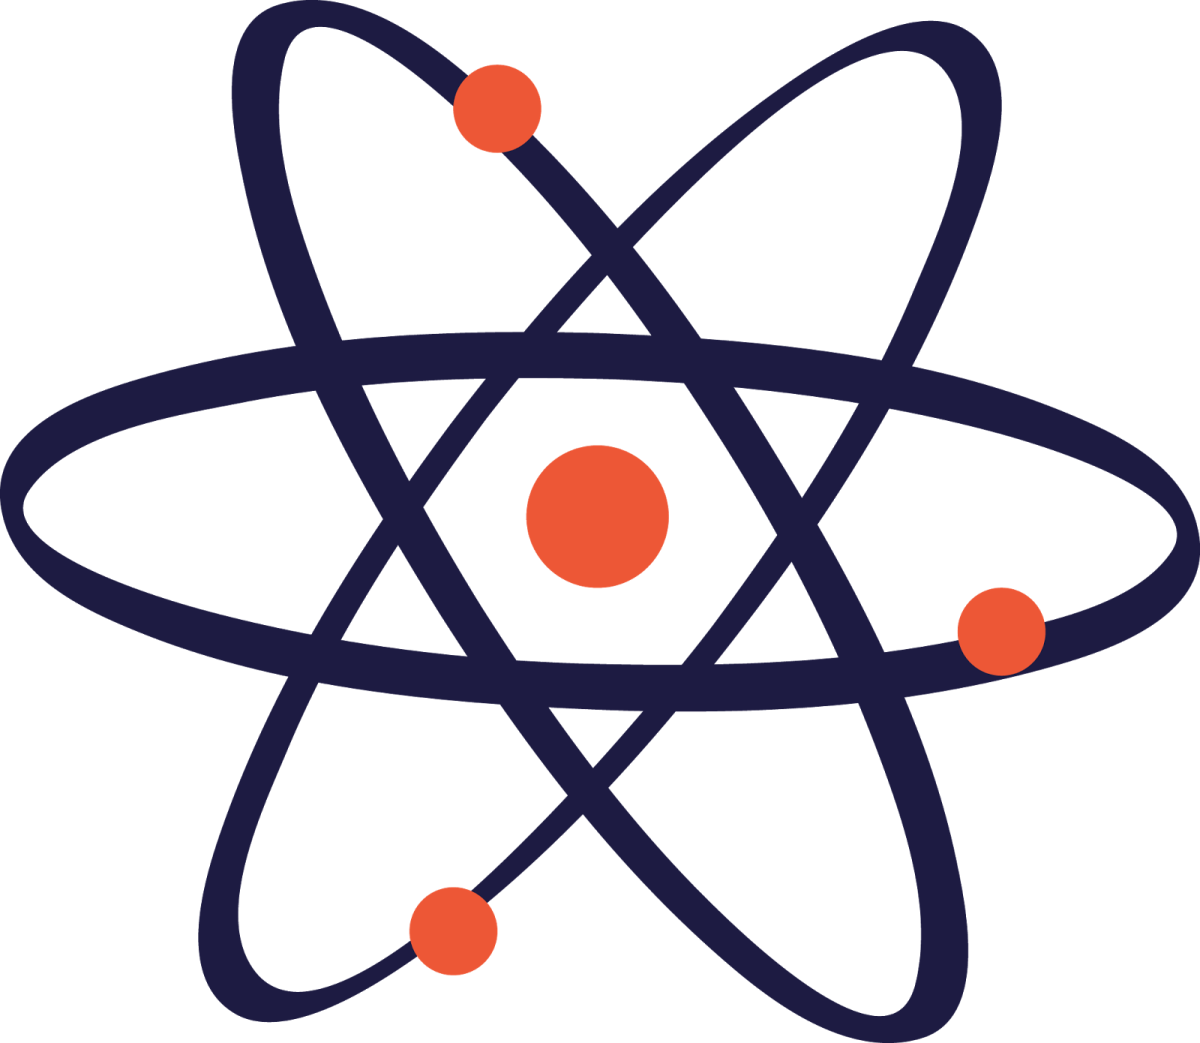 Элементы физики атома. Атом картинка. Атом без фона. Атом рисунок. Символ науки.